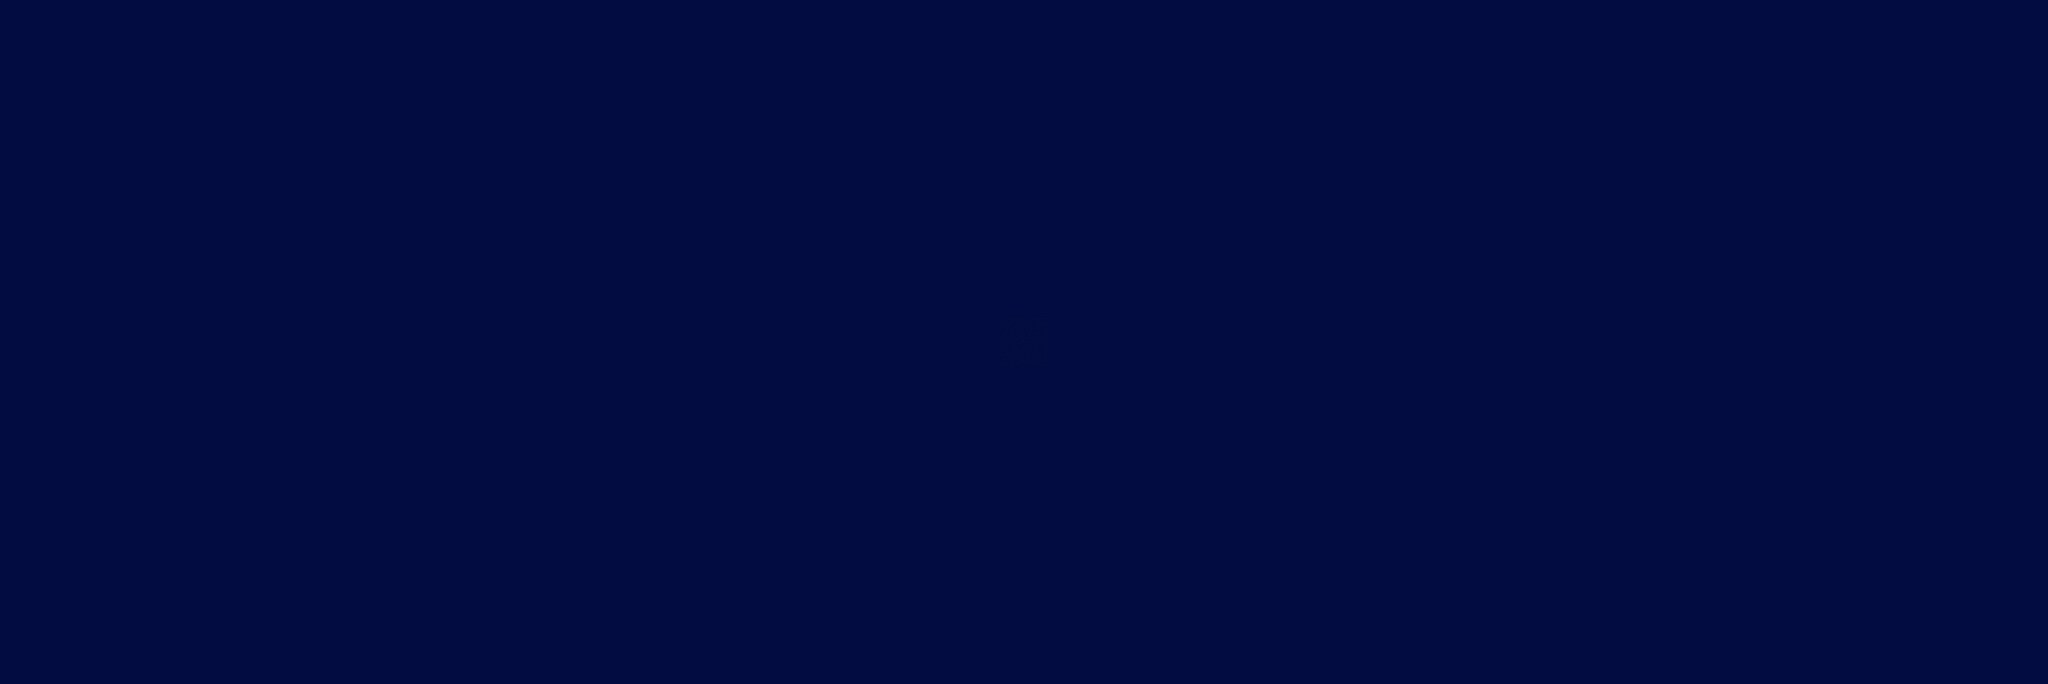 Marvel Studios' Daredevil: Born Again - Featured Content Banner (DEFAULT BLUE SLIM BANNER WITH SEPARATE LOGO)